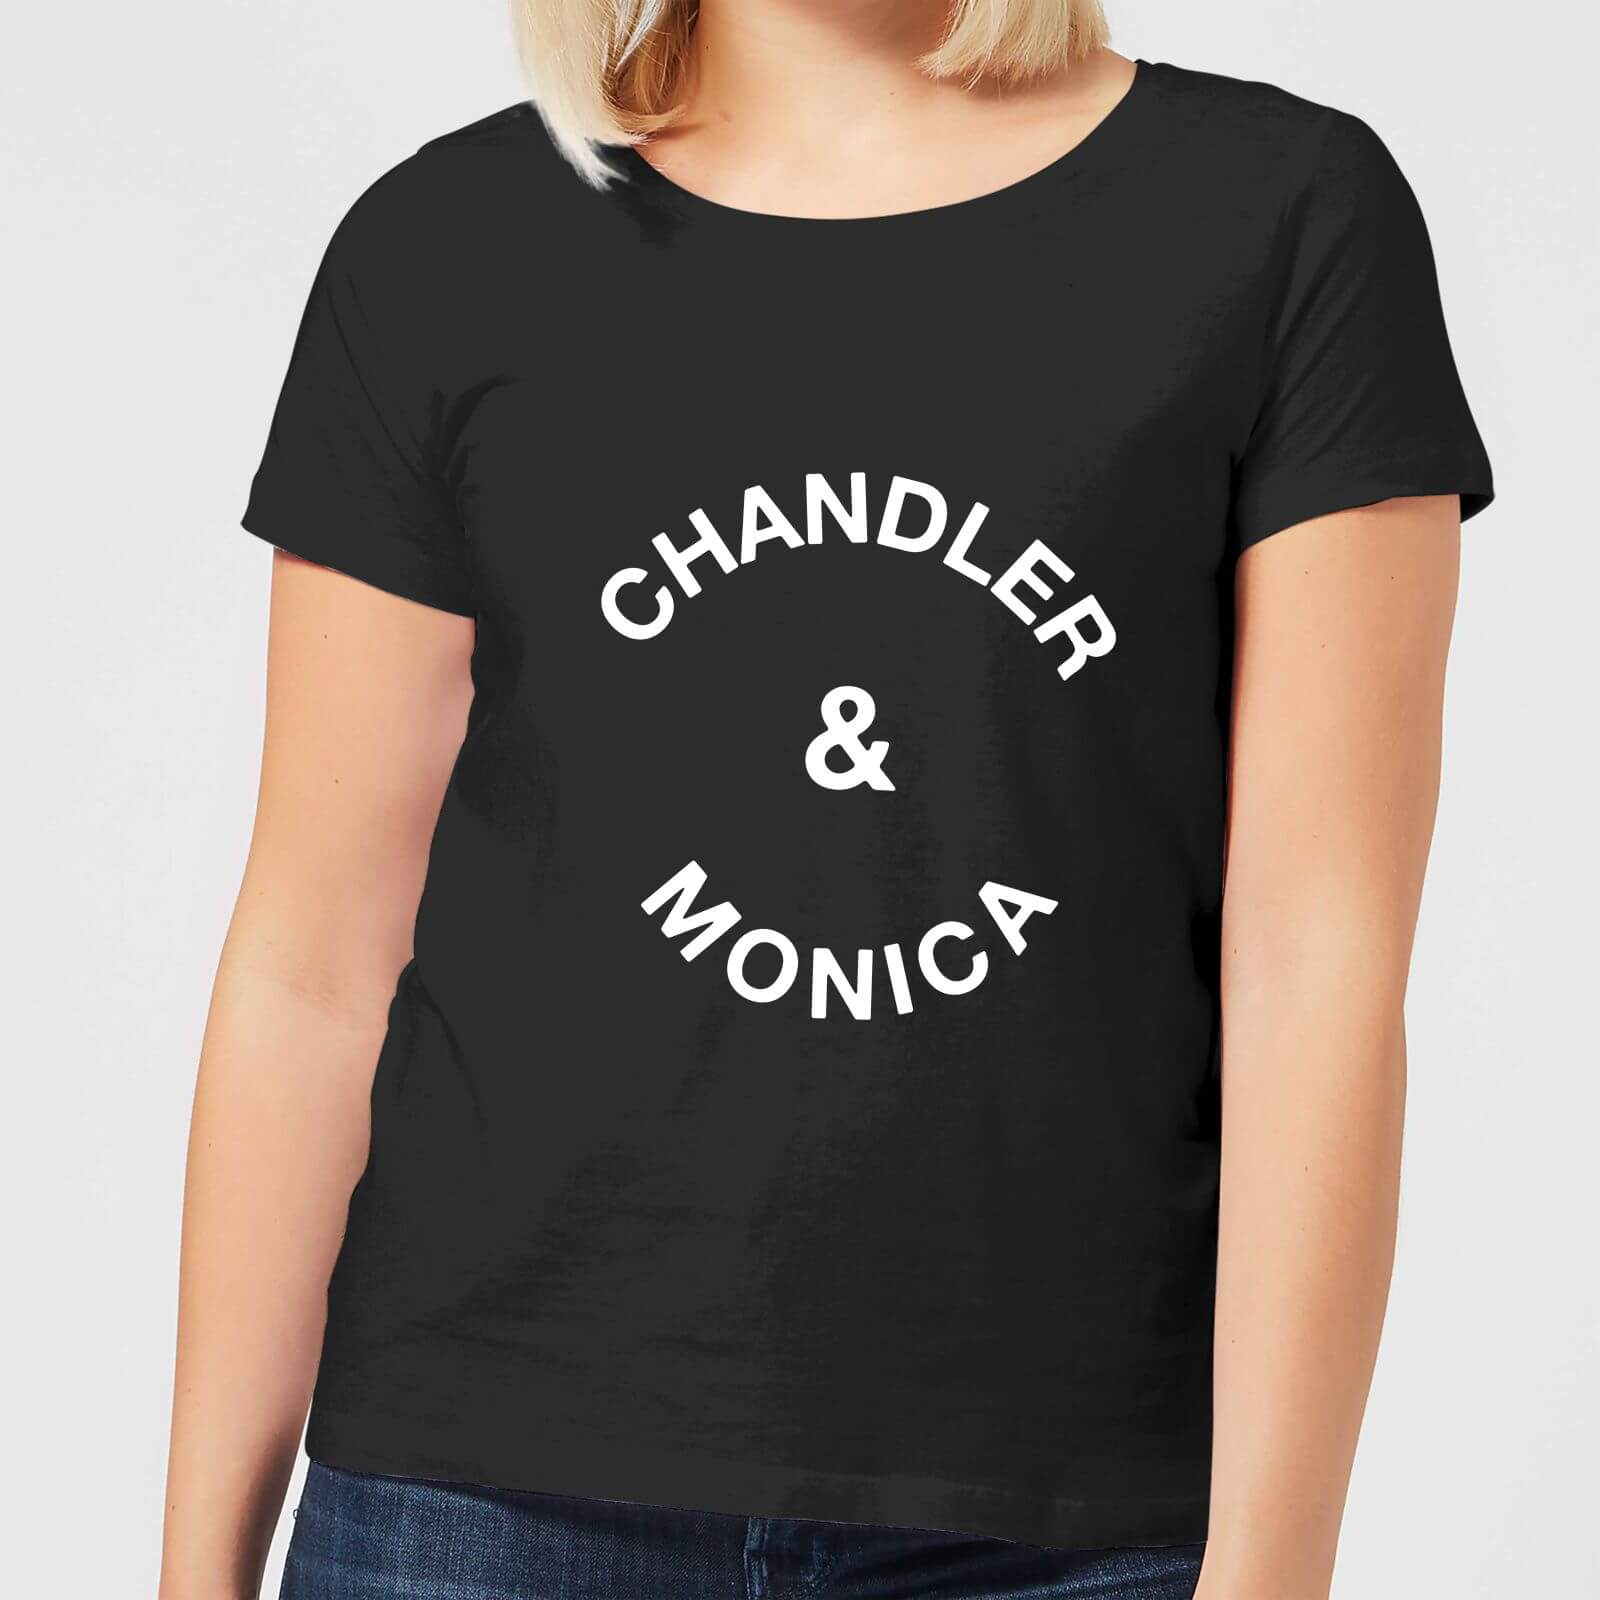 Chandler & Monica Women's T-Shirt - Black - M - Black